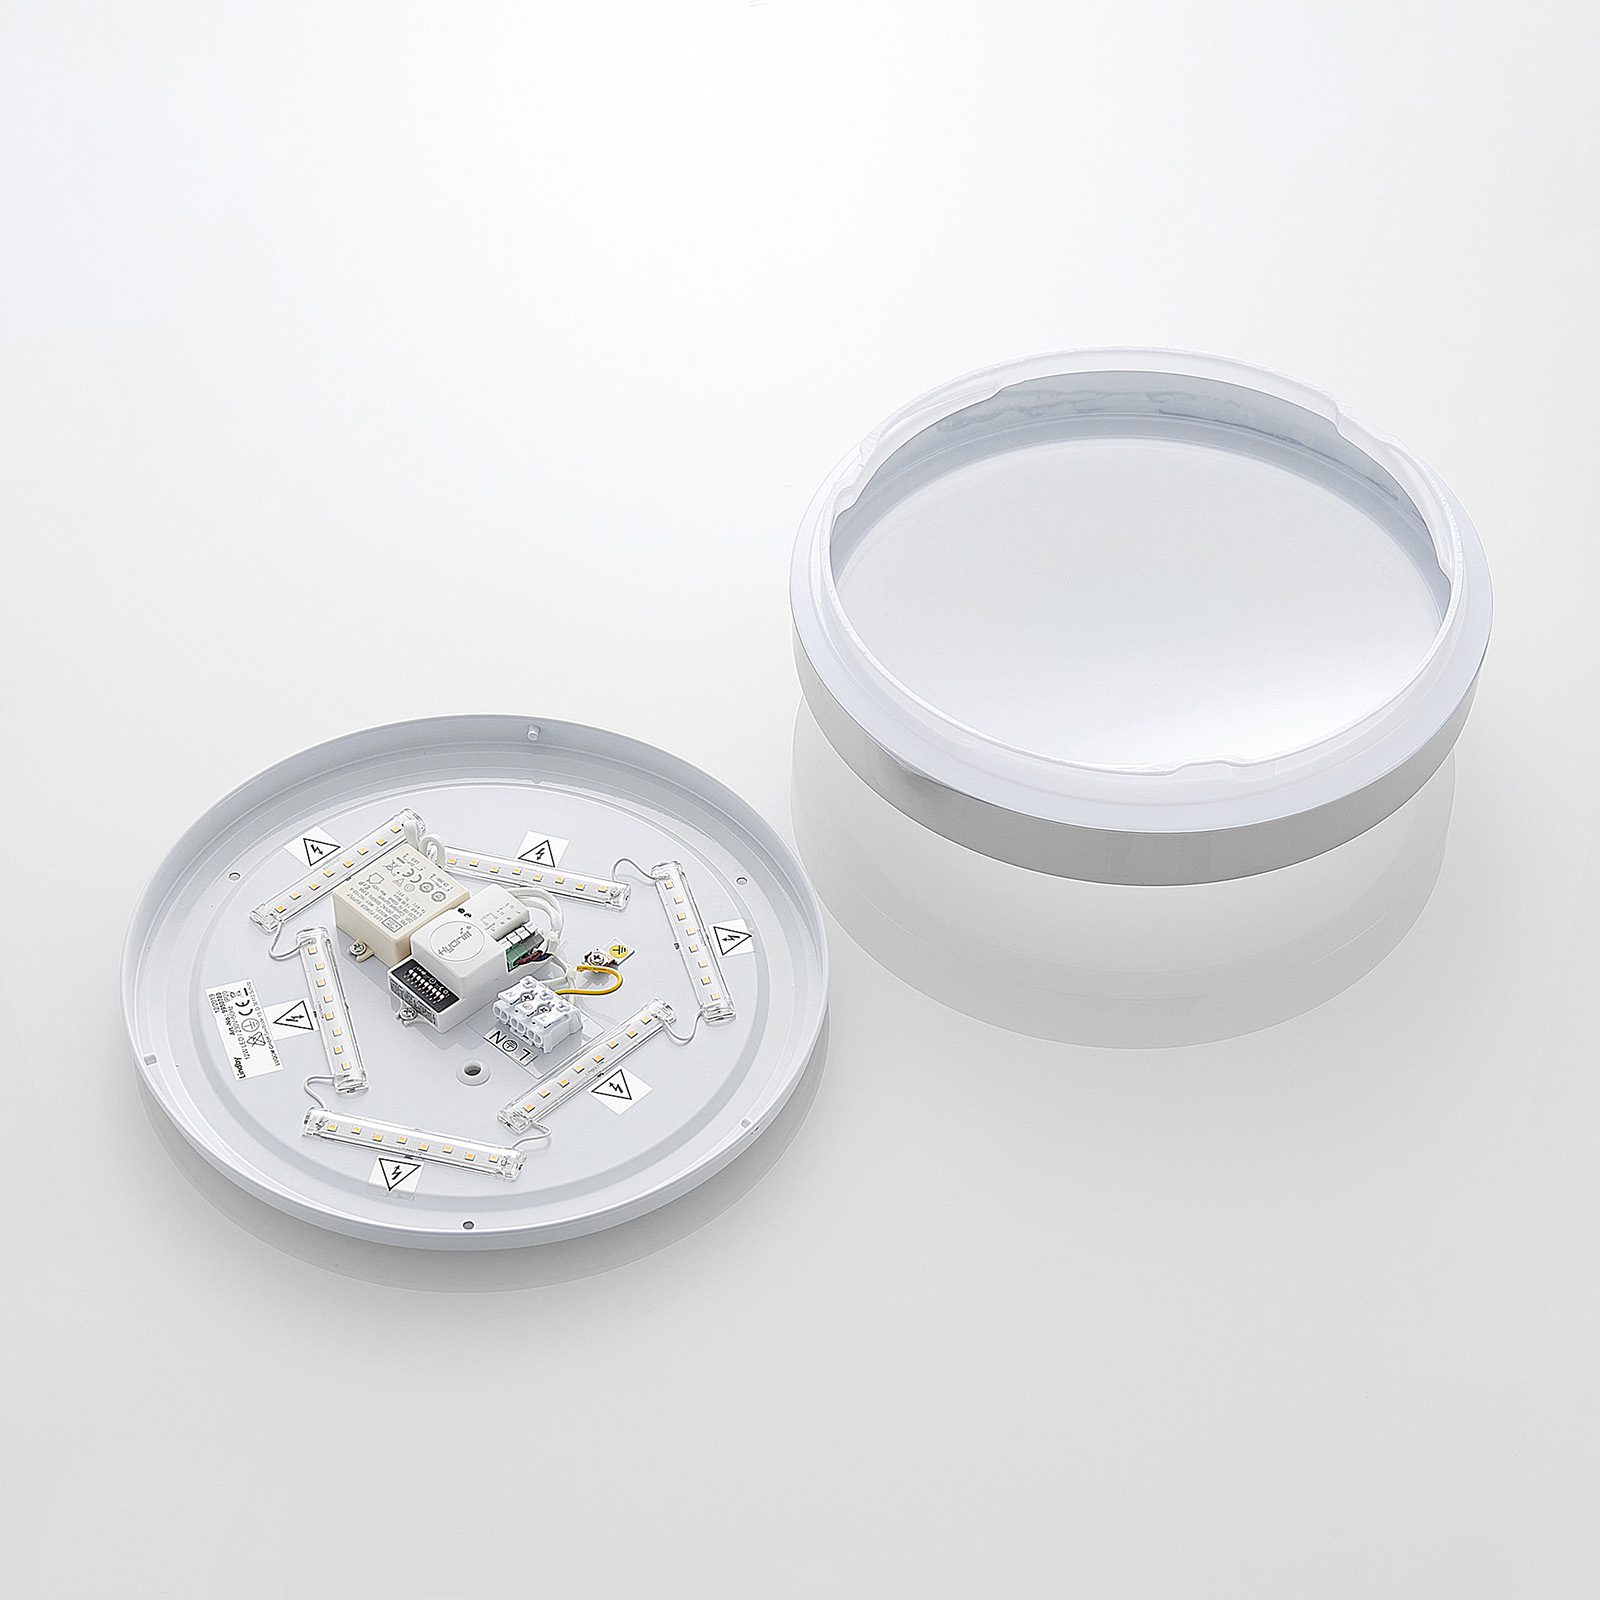 Lindby Camille LED-Sensor-Deckenlampe Ø33cm chrom